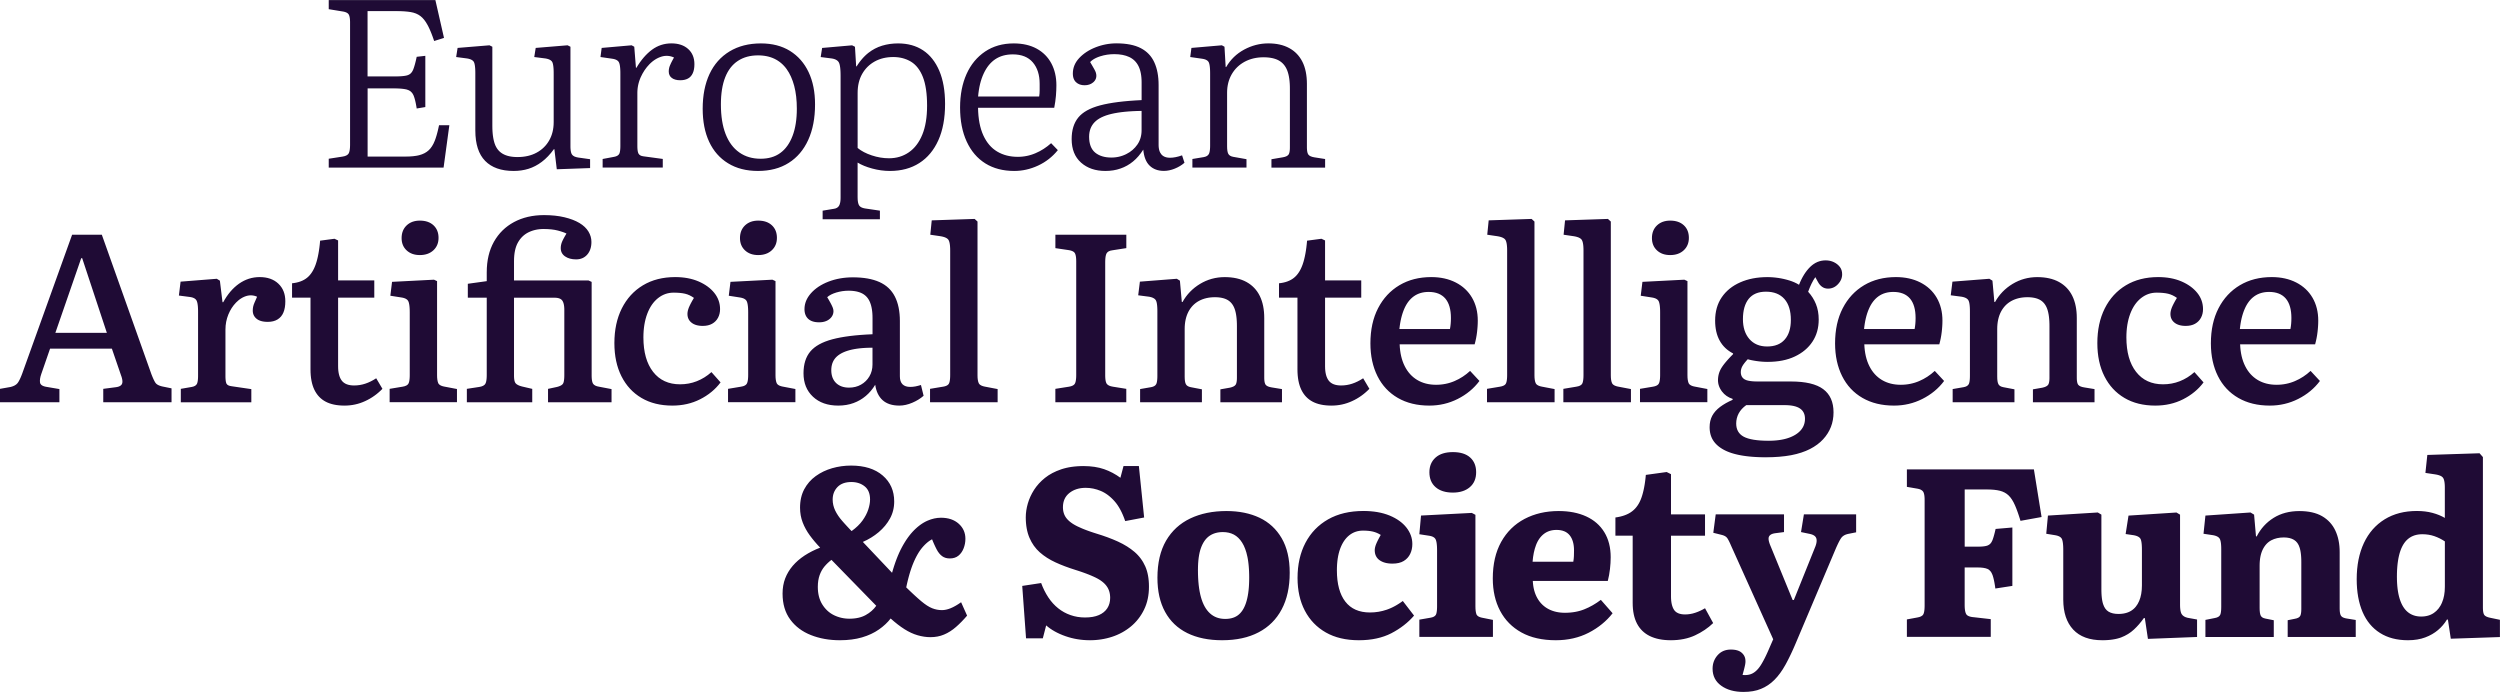 European AI & Society Fund